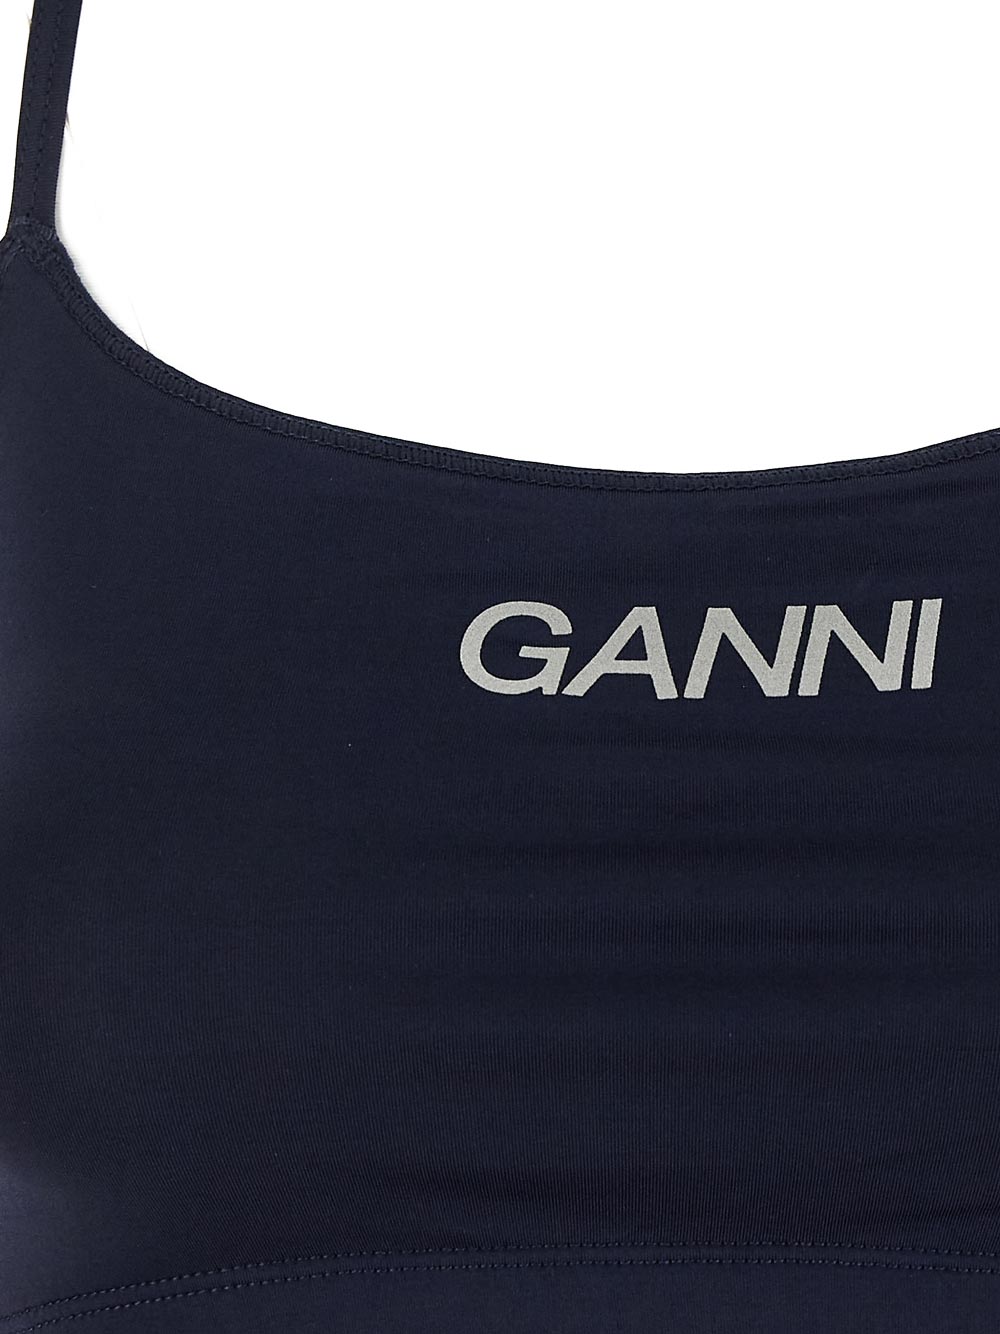 Ganni Active Strap Top